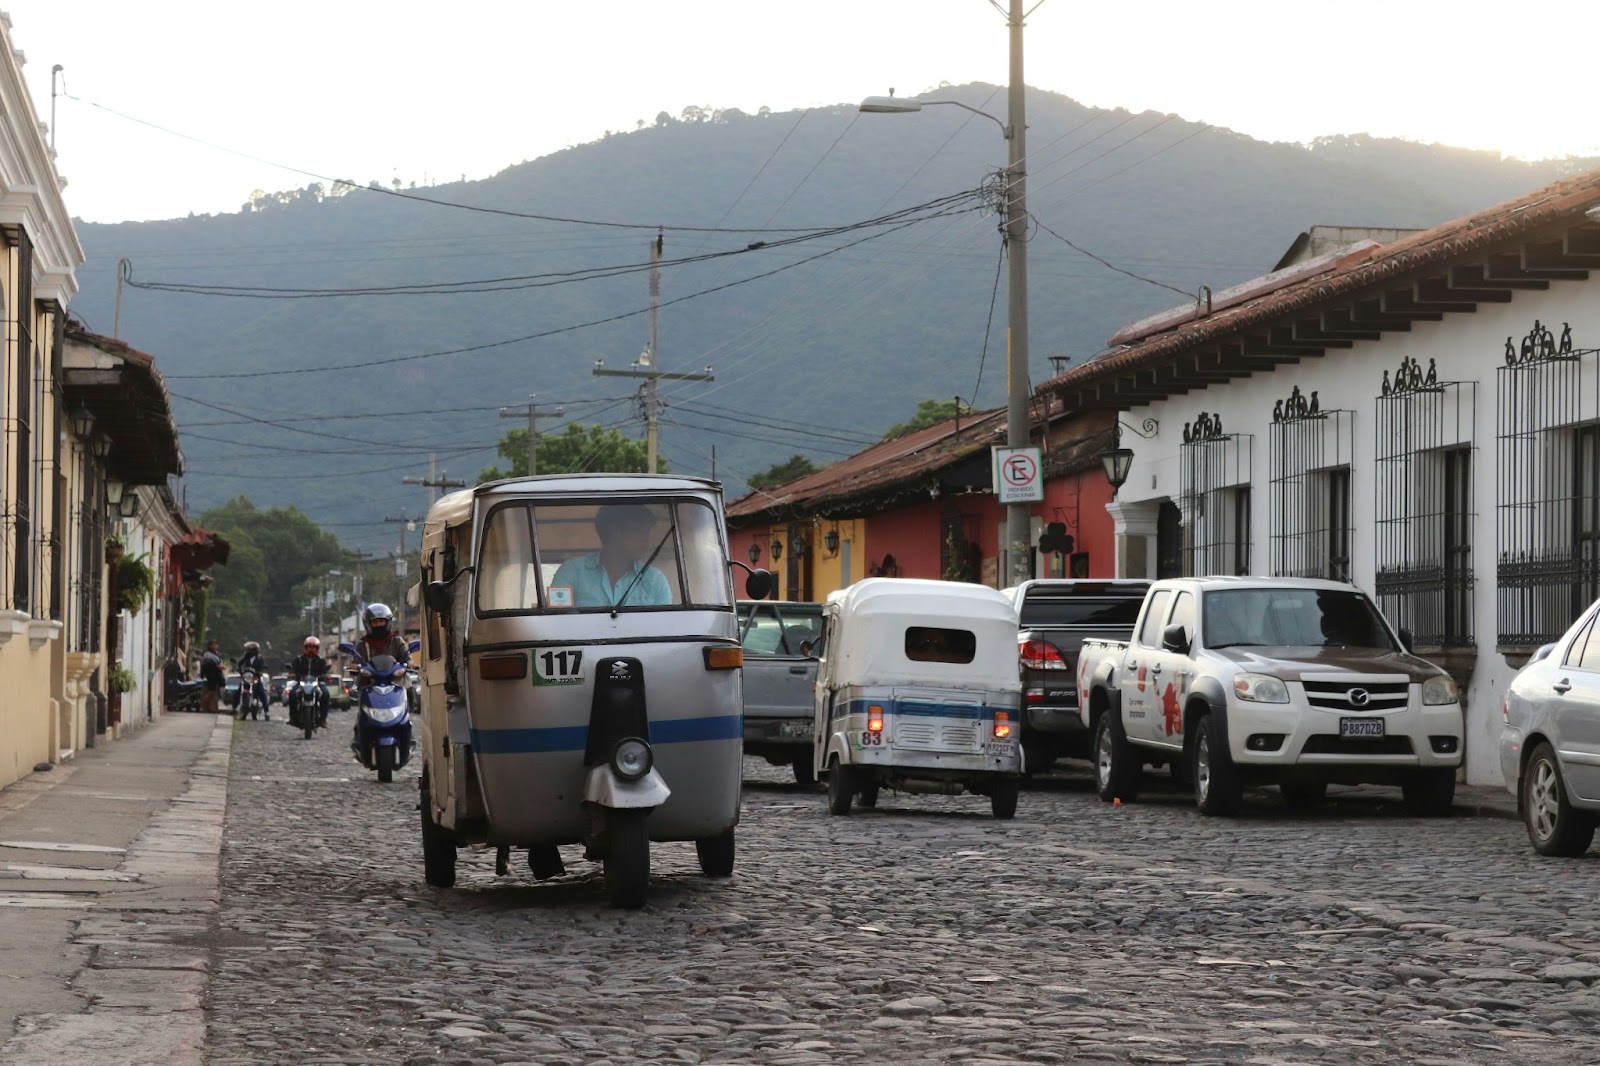 Antigua is a popular travel destination in Guatemala. 
pictured: Antigua